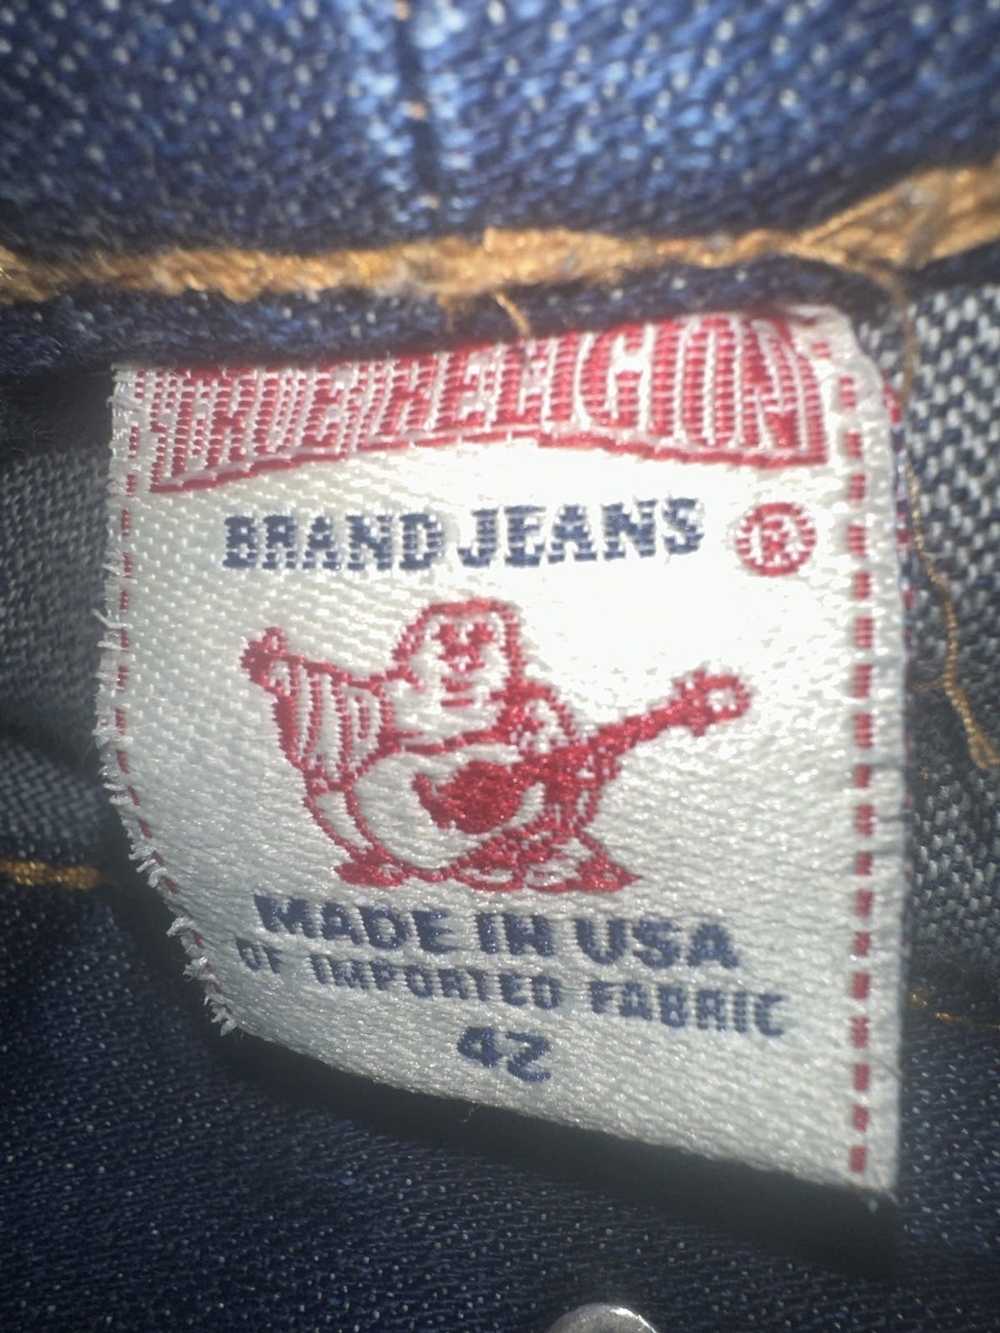 True Religion Vintage True Religion Jeans - image 3